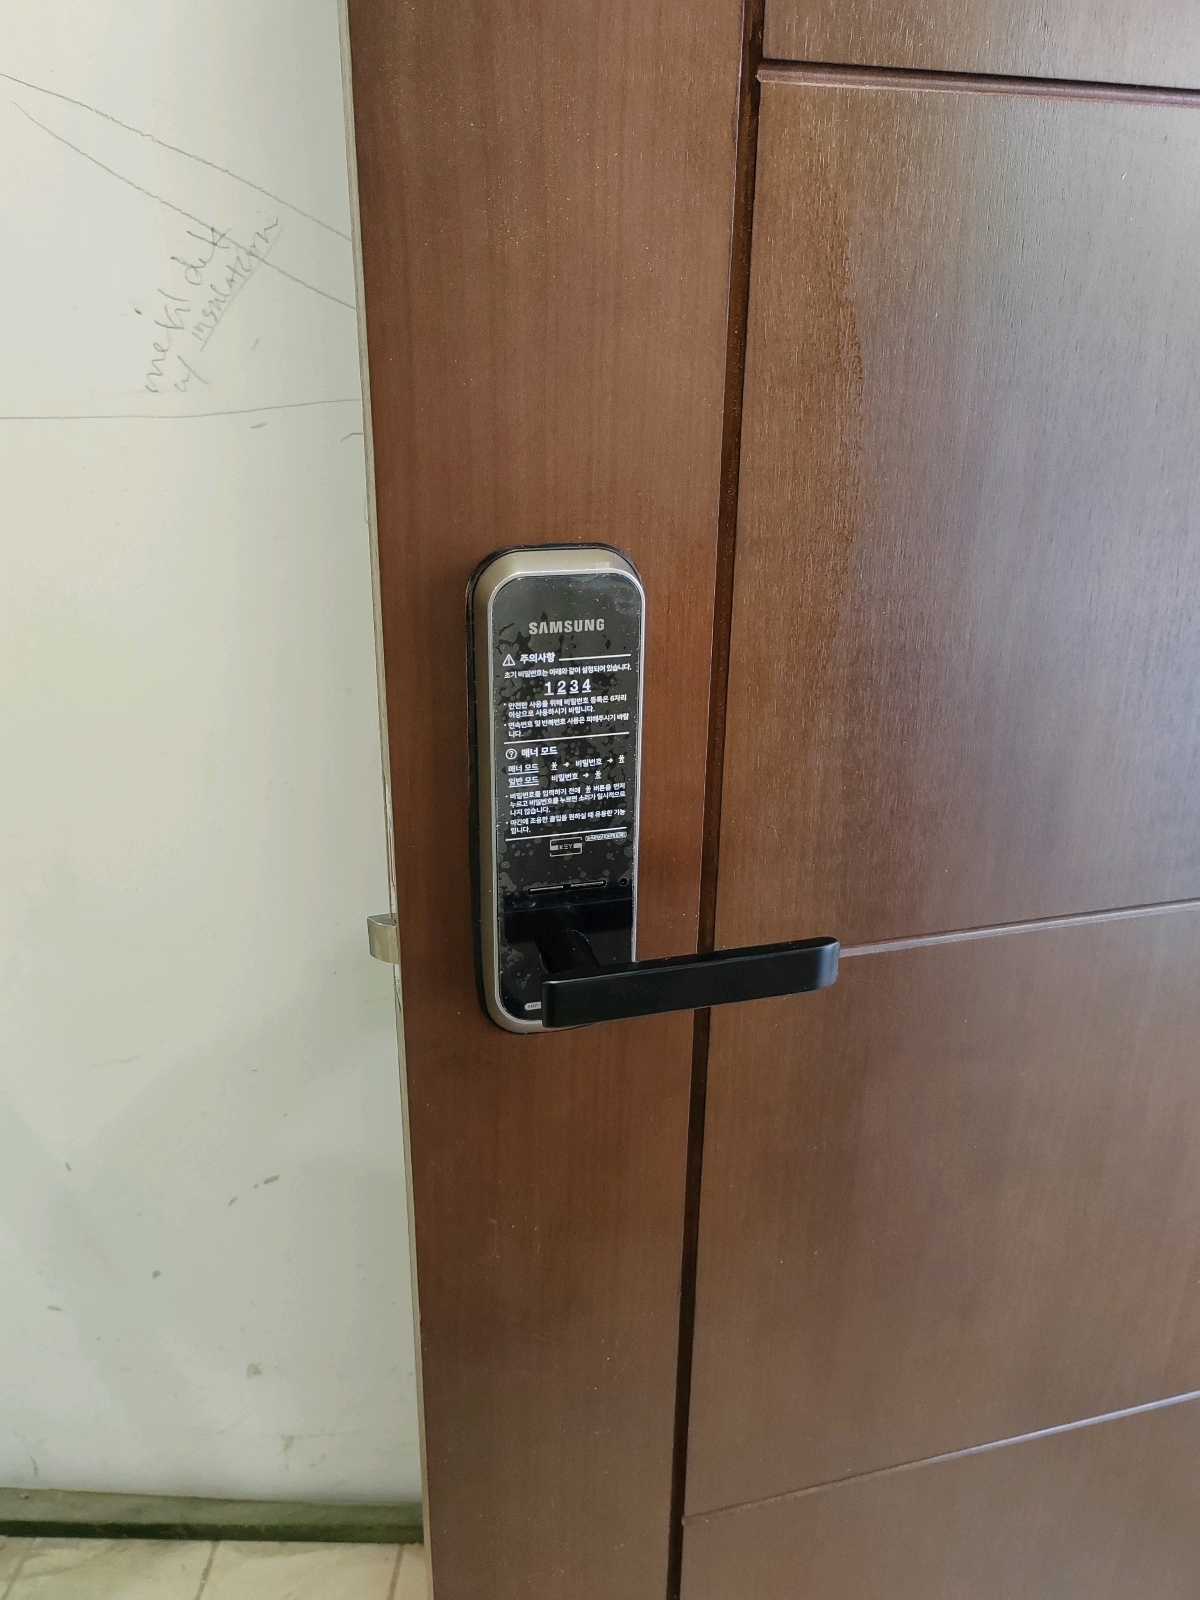 Samsung smart lock installation